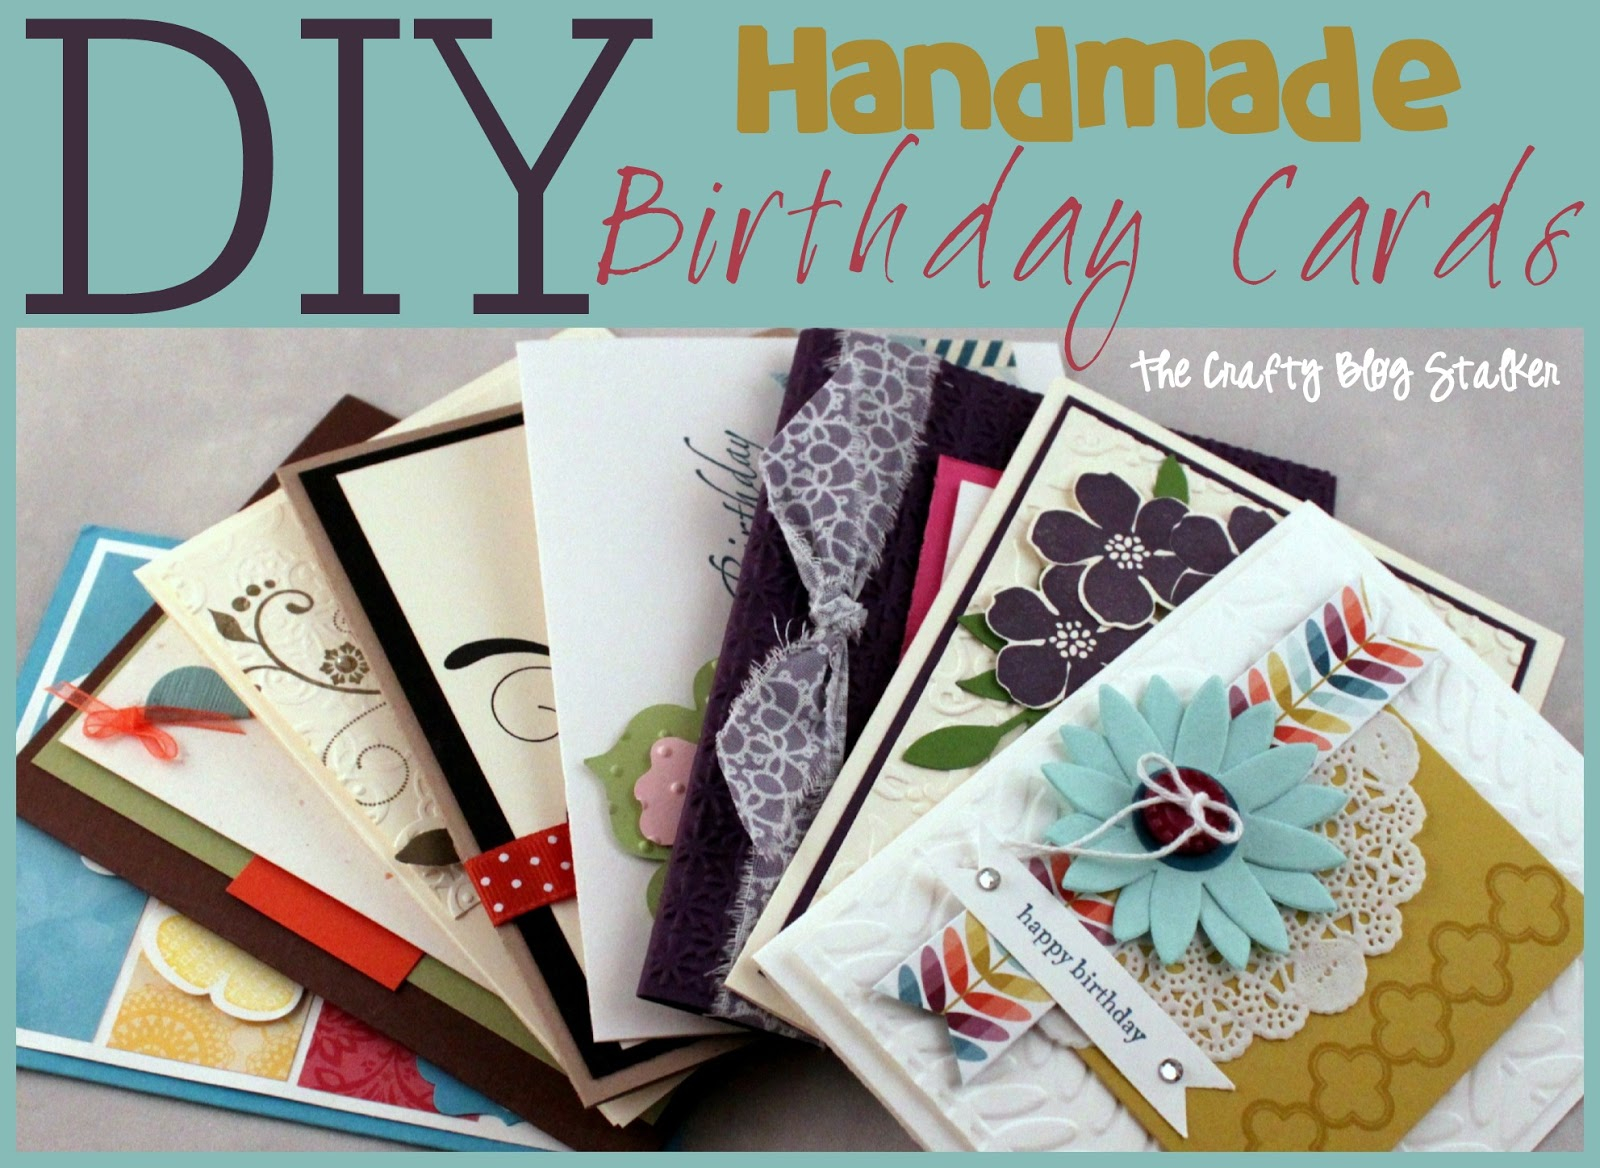 Handmade Birthday Cards Ideas Handmade Birthday Card Ideas The Crafty Blog Stalker